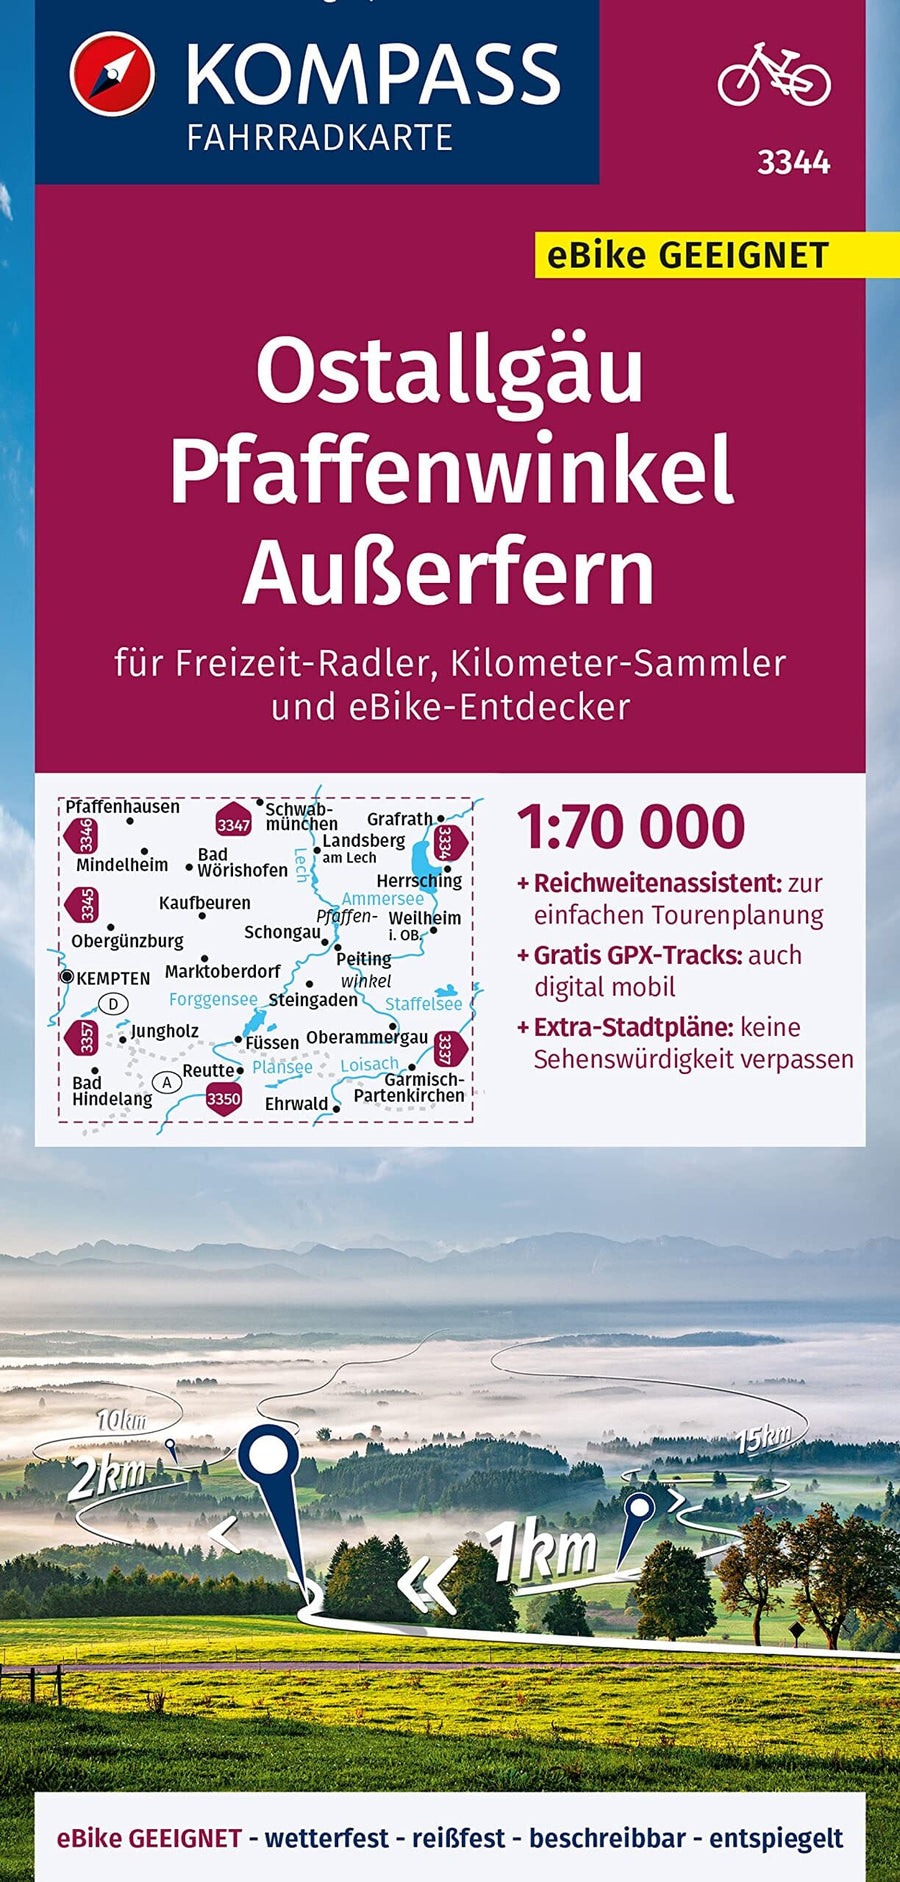 Carte cycliste n° F3344 - Ostallgäu, Pfaffenwinkel, Ausserfern (Allemagne) | Kompass carte pliée Kompass 